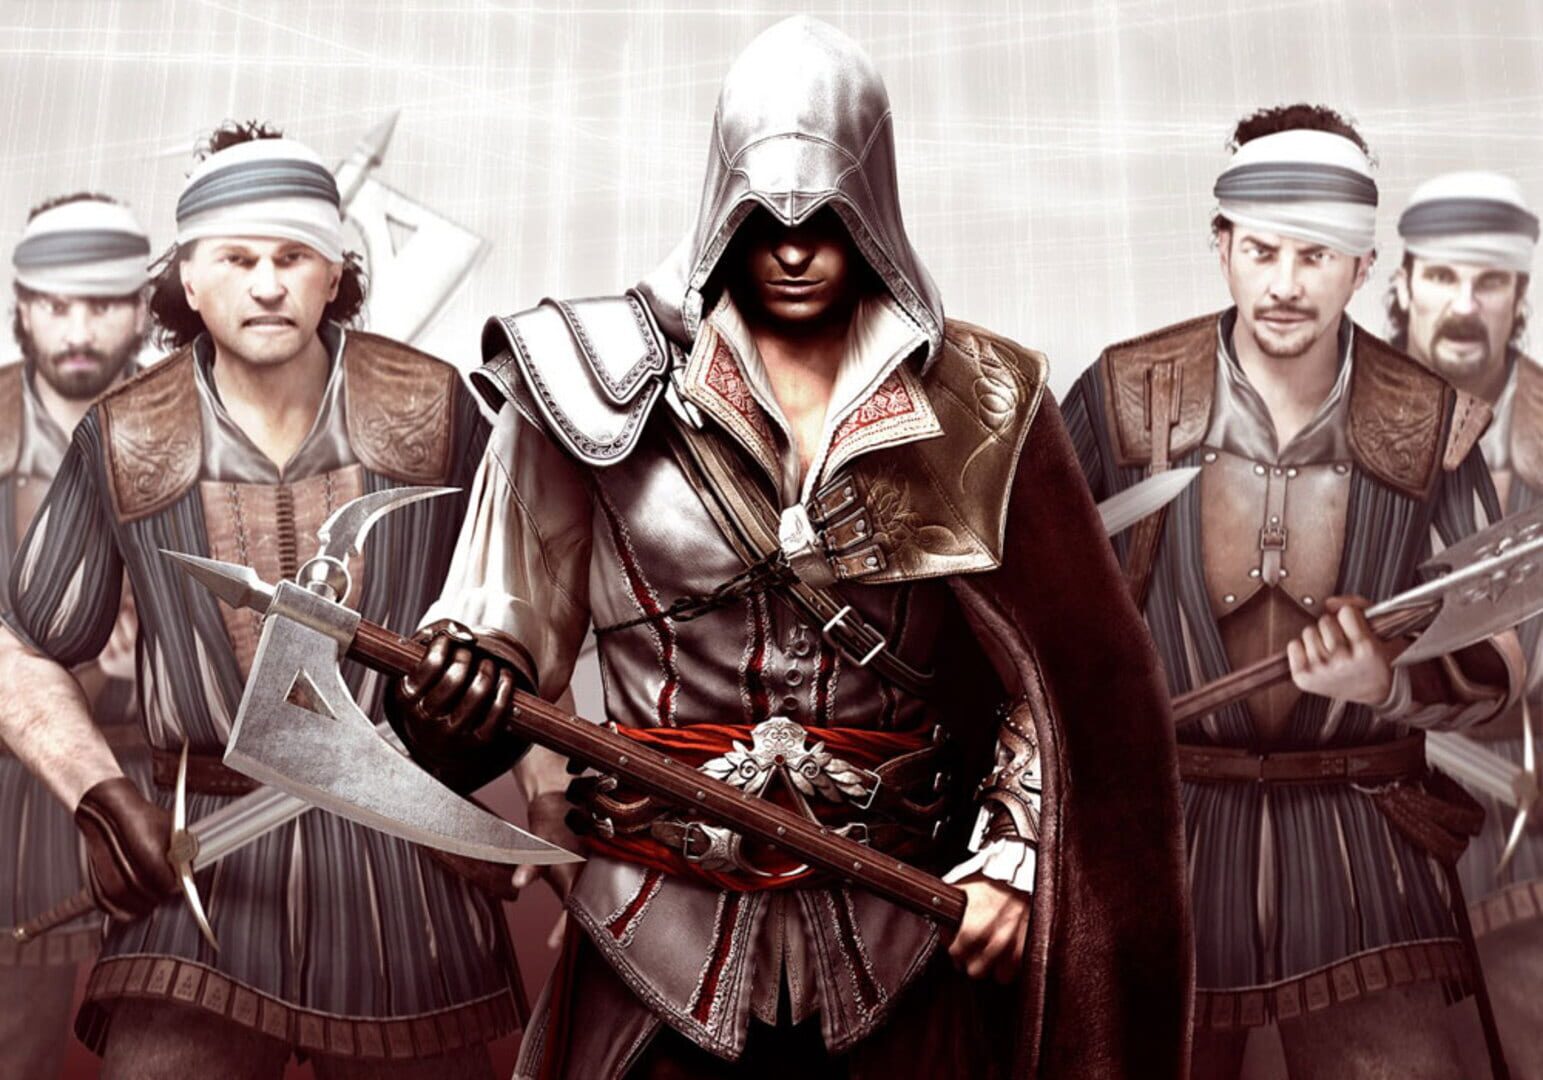 Arte - Assassin's Creed II